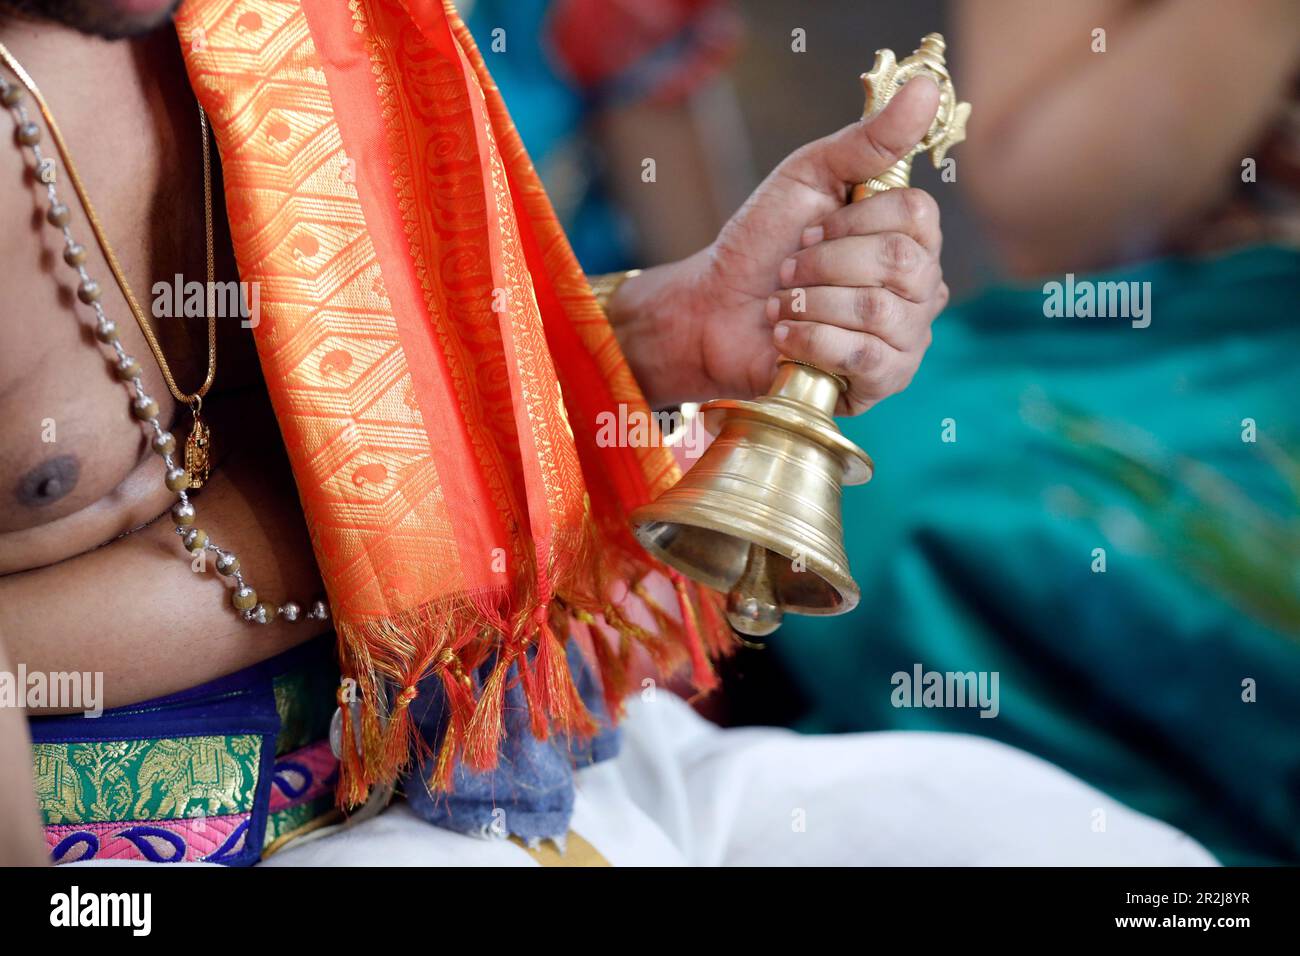 Hand holding ceremonial bell, Sri Srinivasa Perumal Hindu temple, Hindu priest (Brahmin) performing puja ceremony and rituals, Singapore Stock Photo